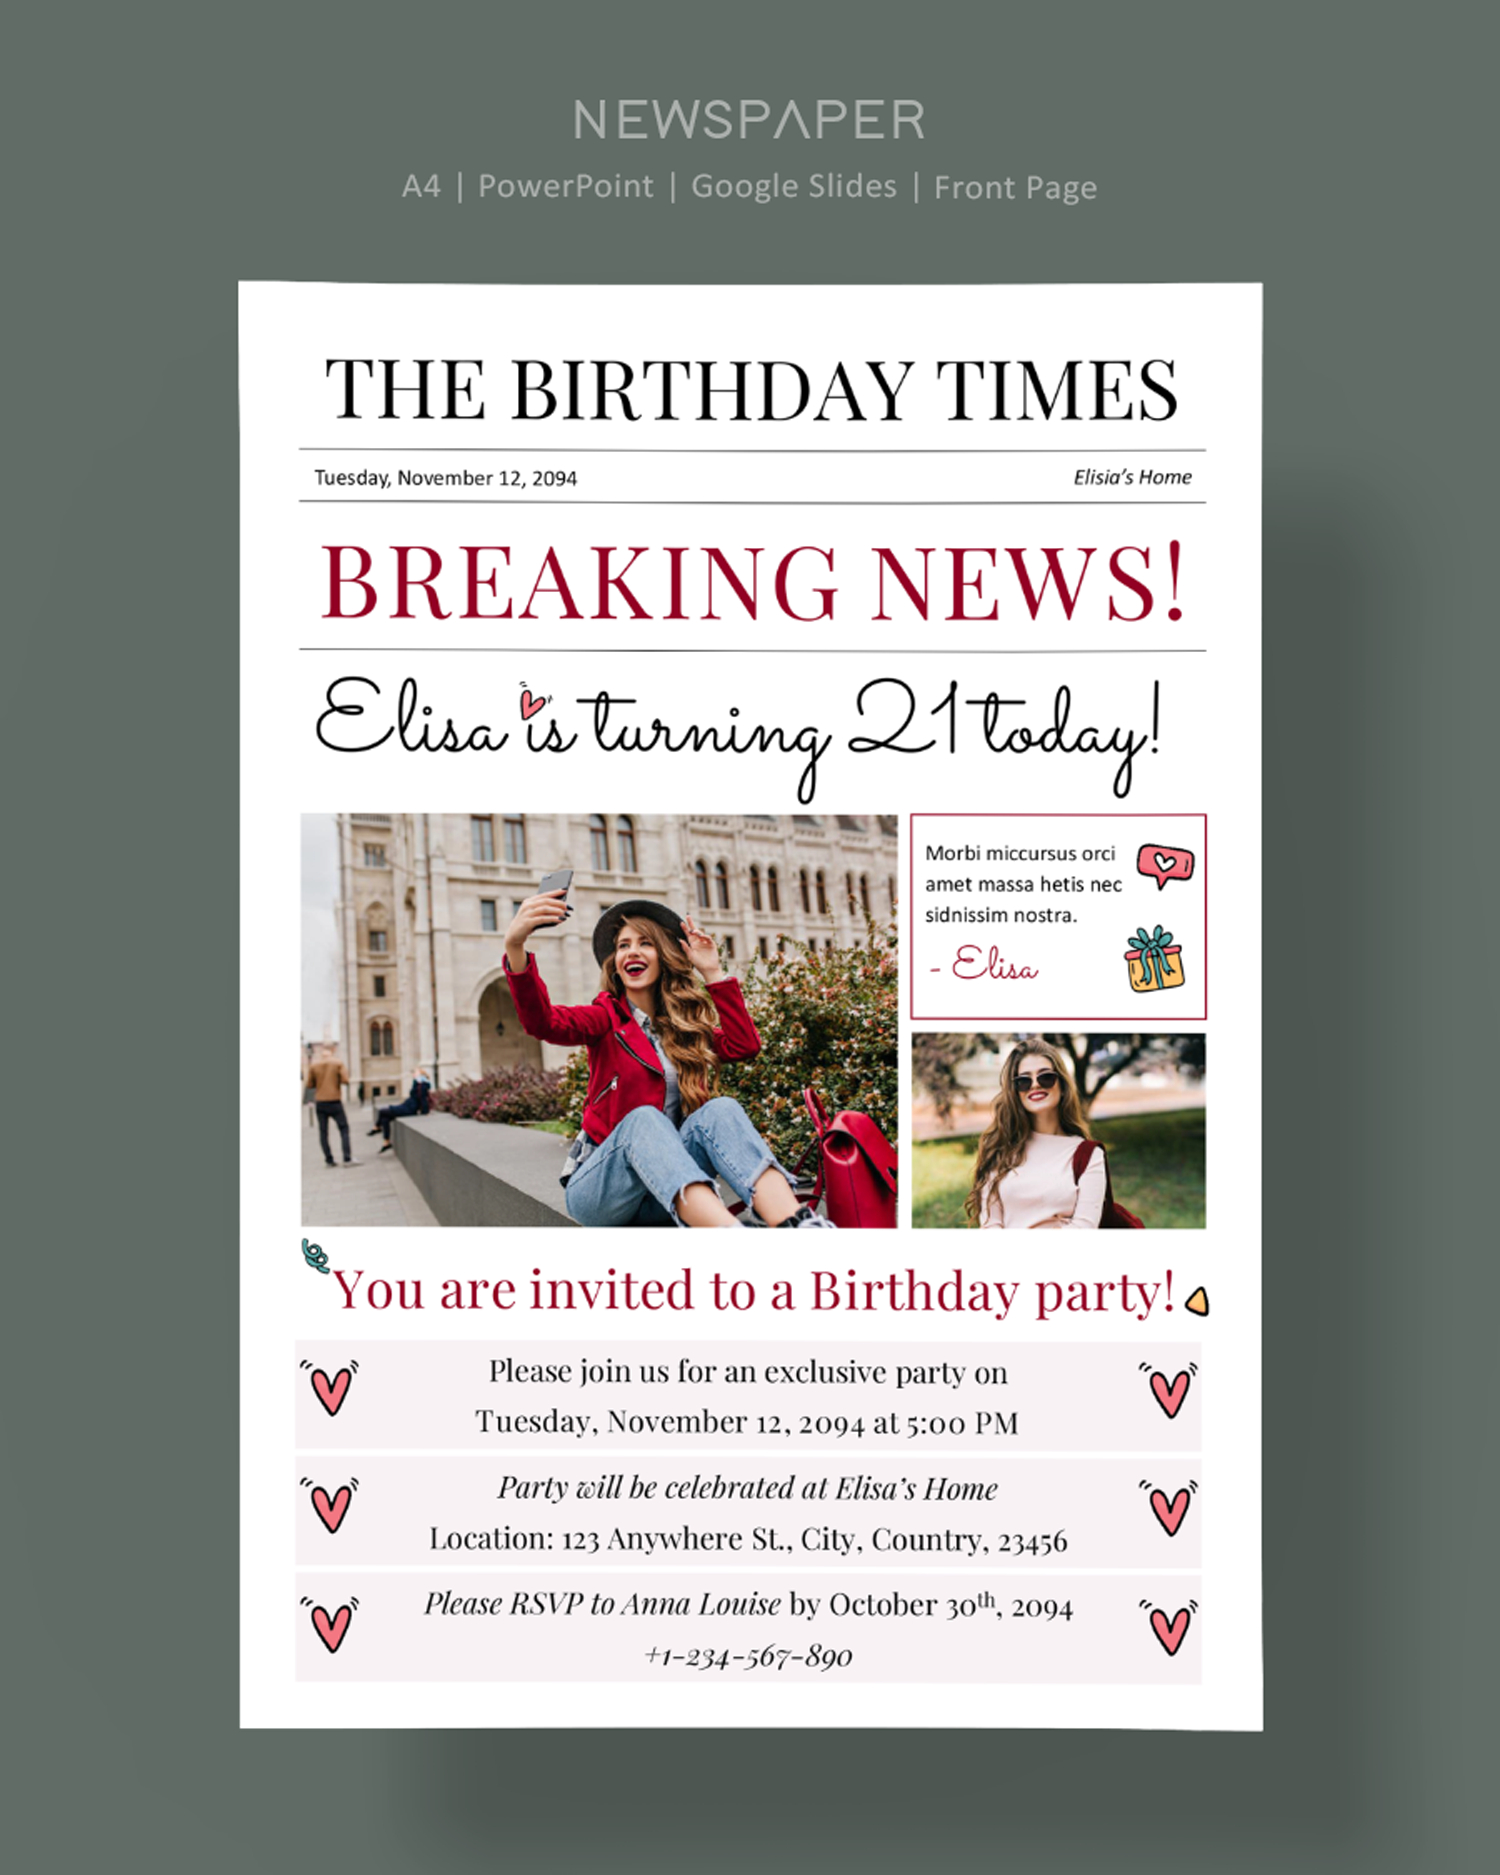 Newspaper Birthday Invitation Card Template - PowerPoint, Google Slides